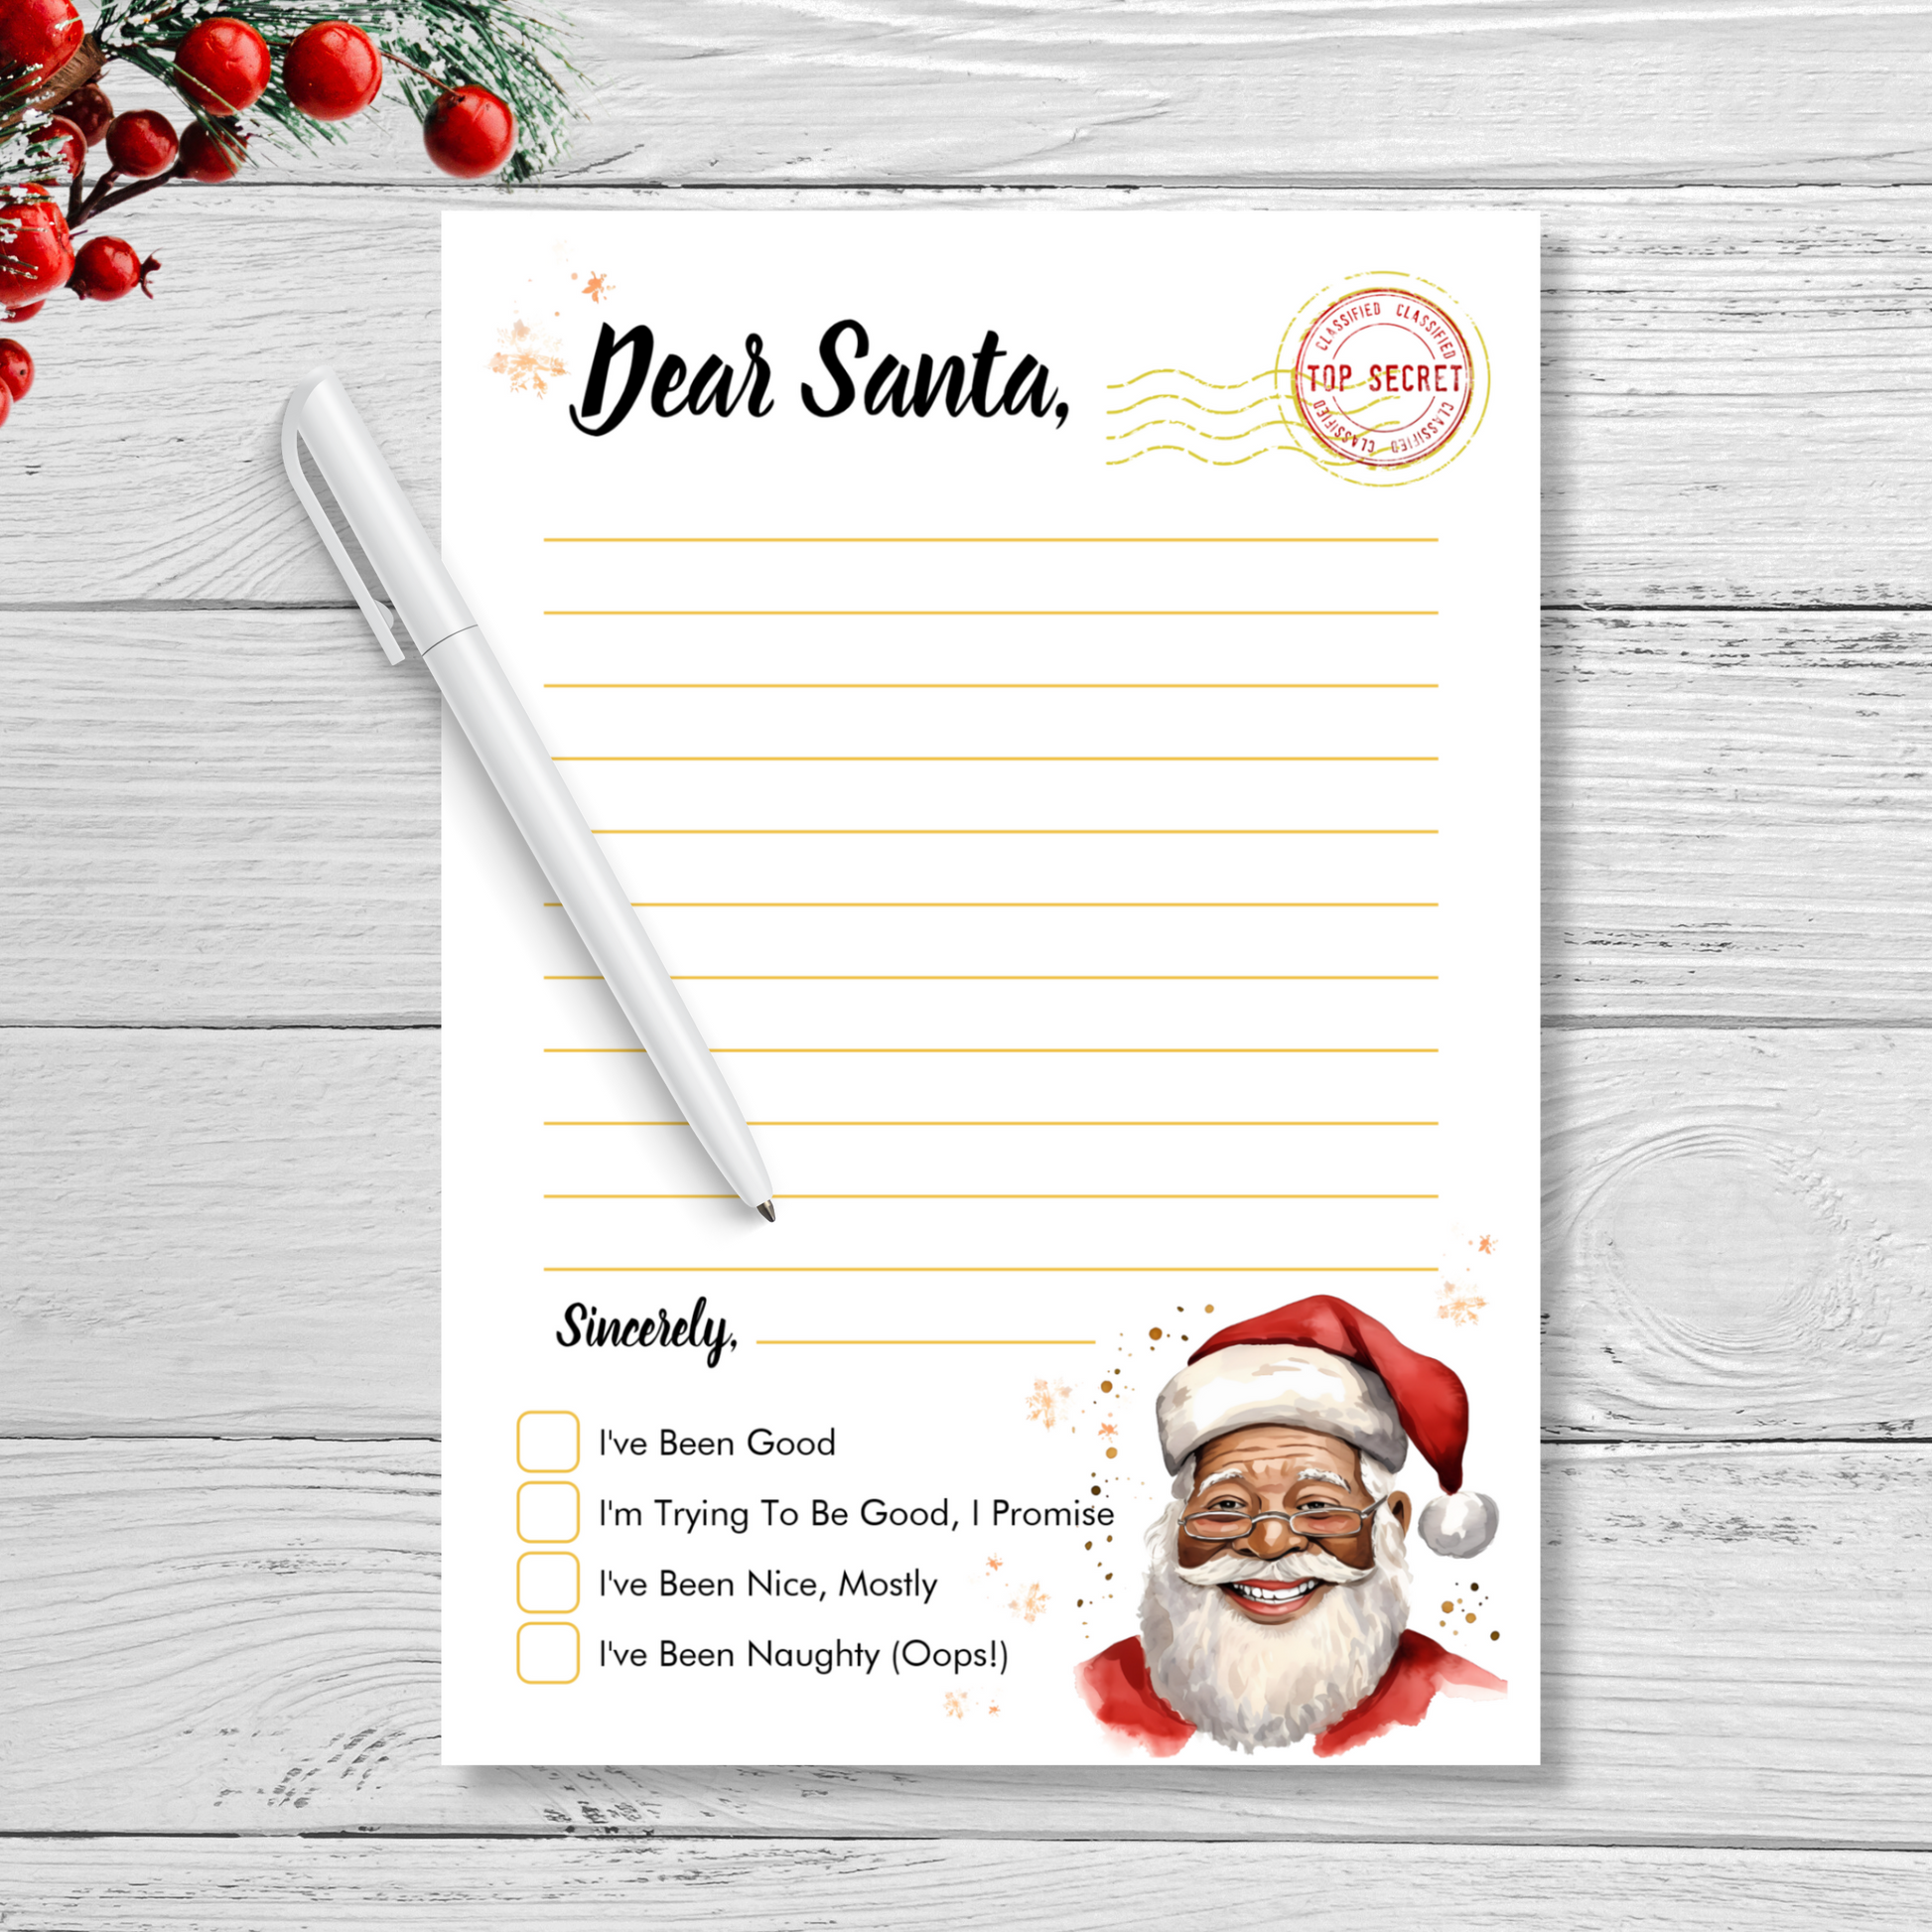 Dear Santa letter and drawing activity set Black Santa  keepsake idea for kids, easy instant digital download printable